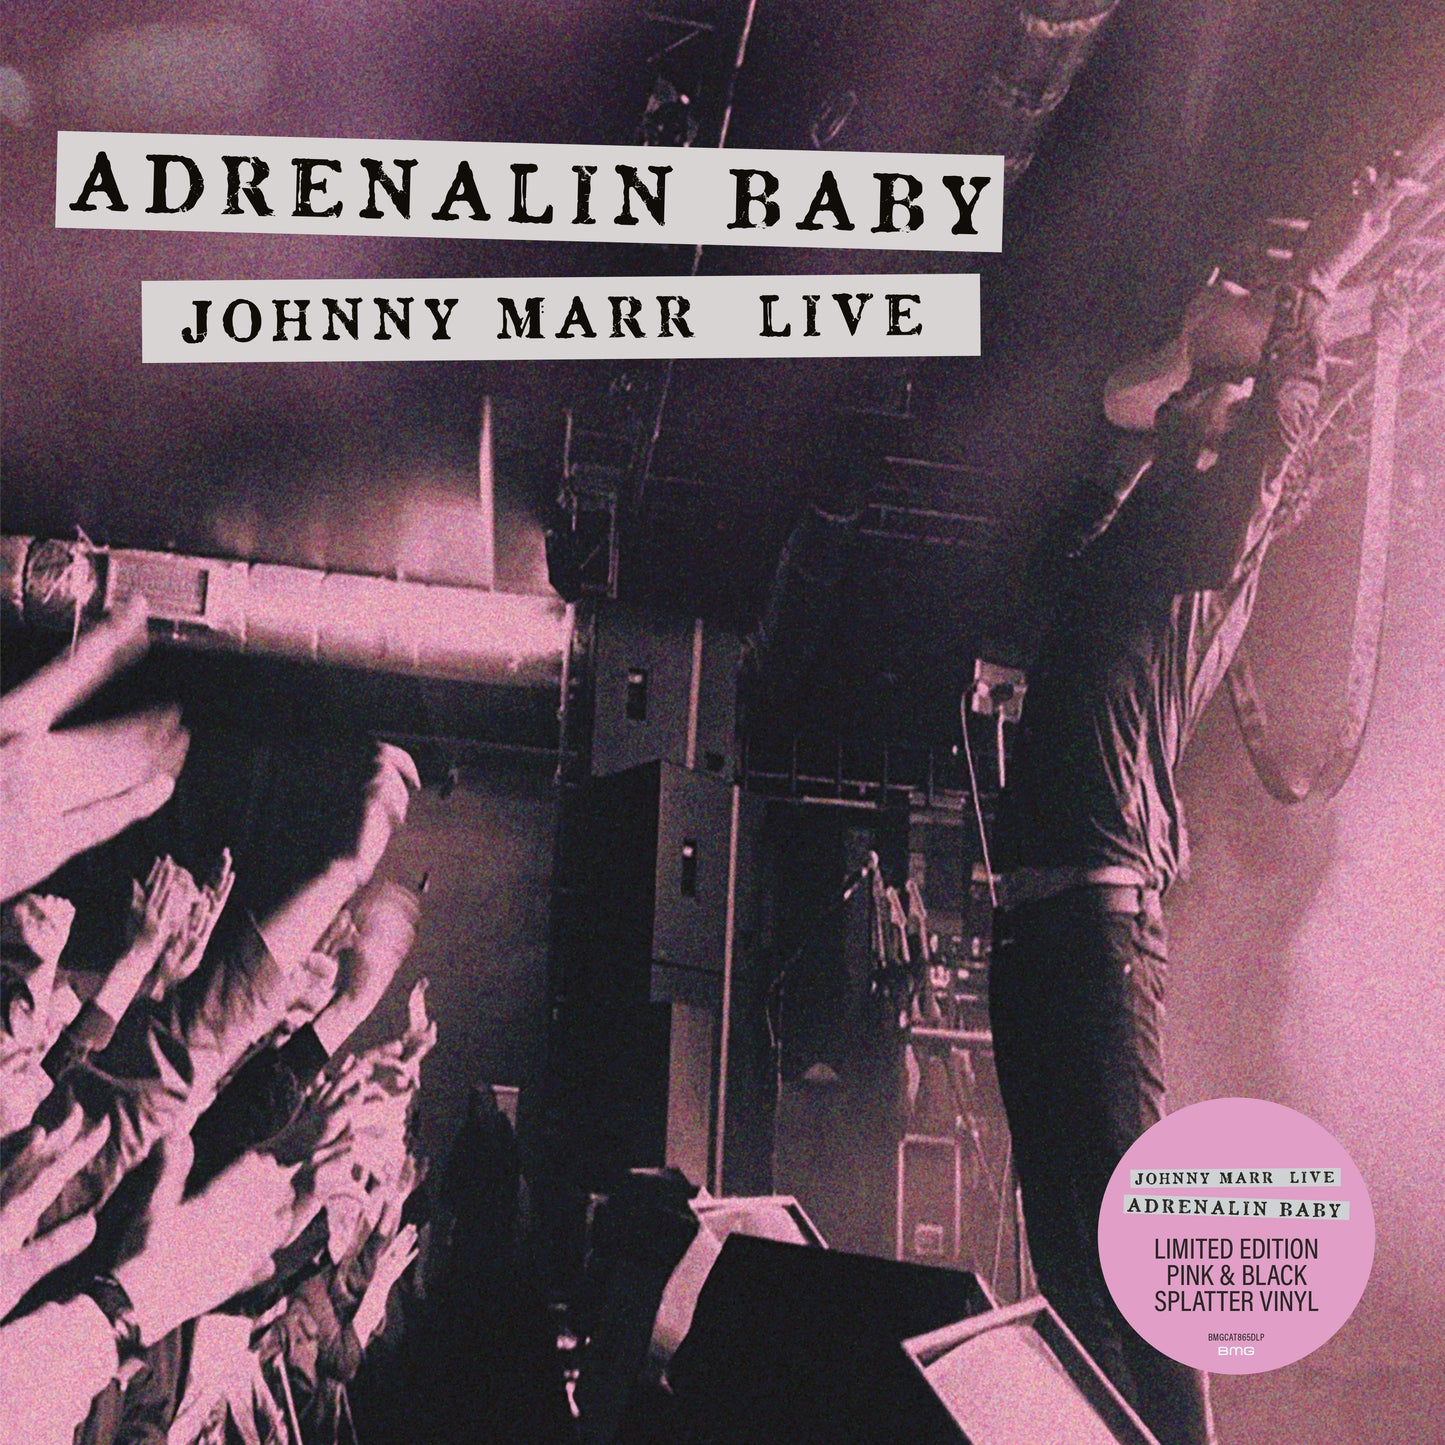 PRE-ORDER: Johnny Marr "Adrenalin Baby - Johnny Marr Live" 2xLP (Pink & Black Splatter)